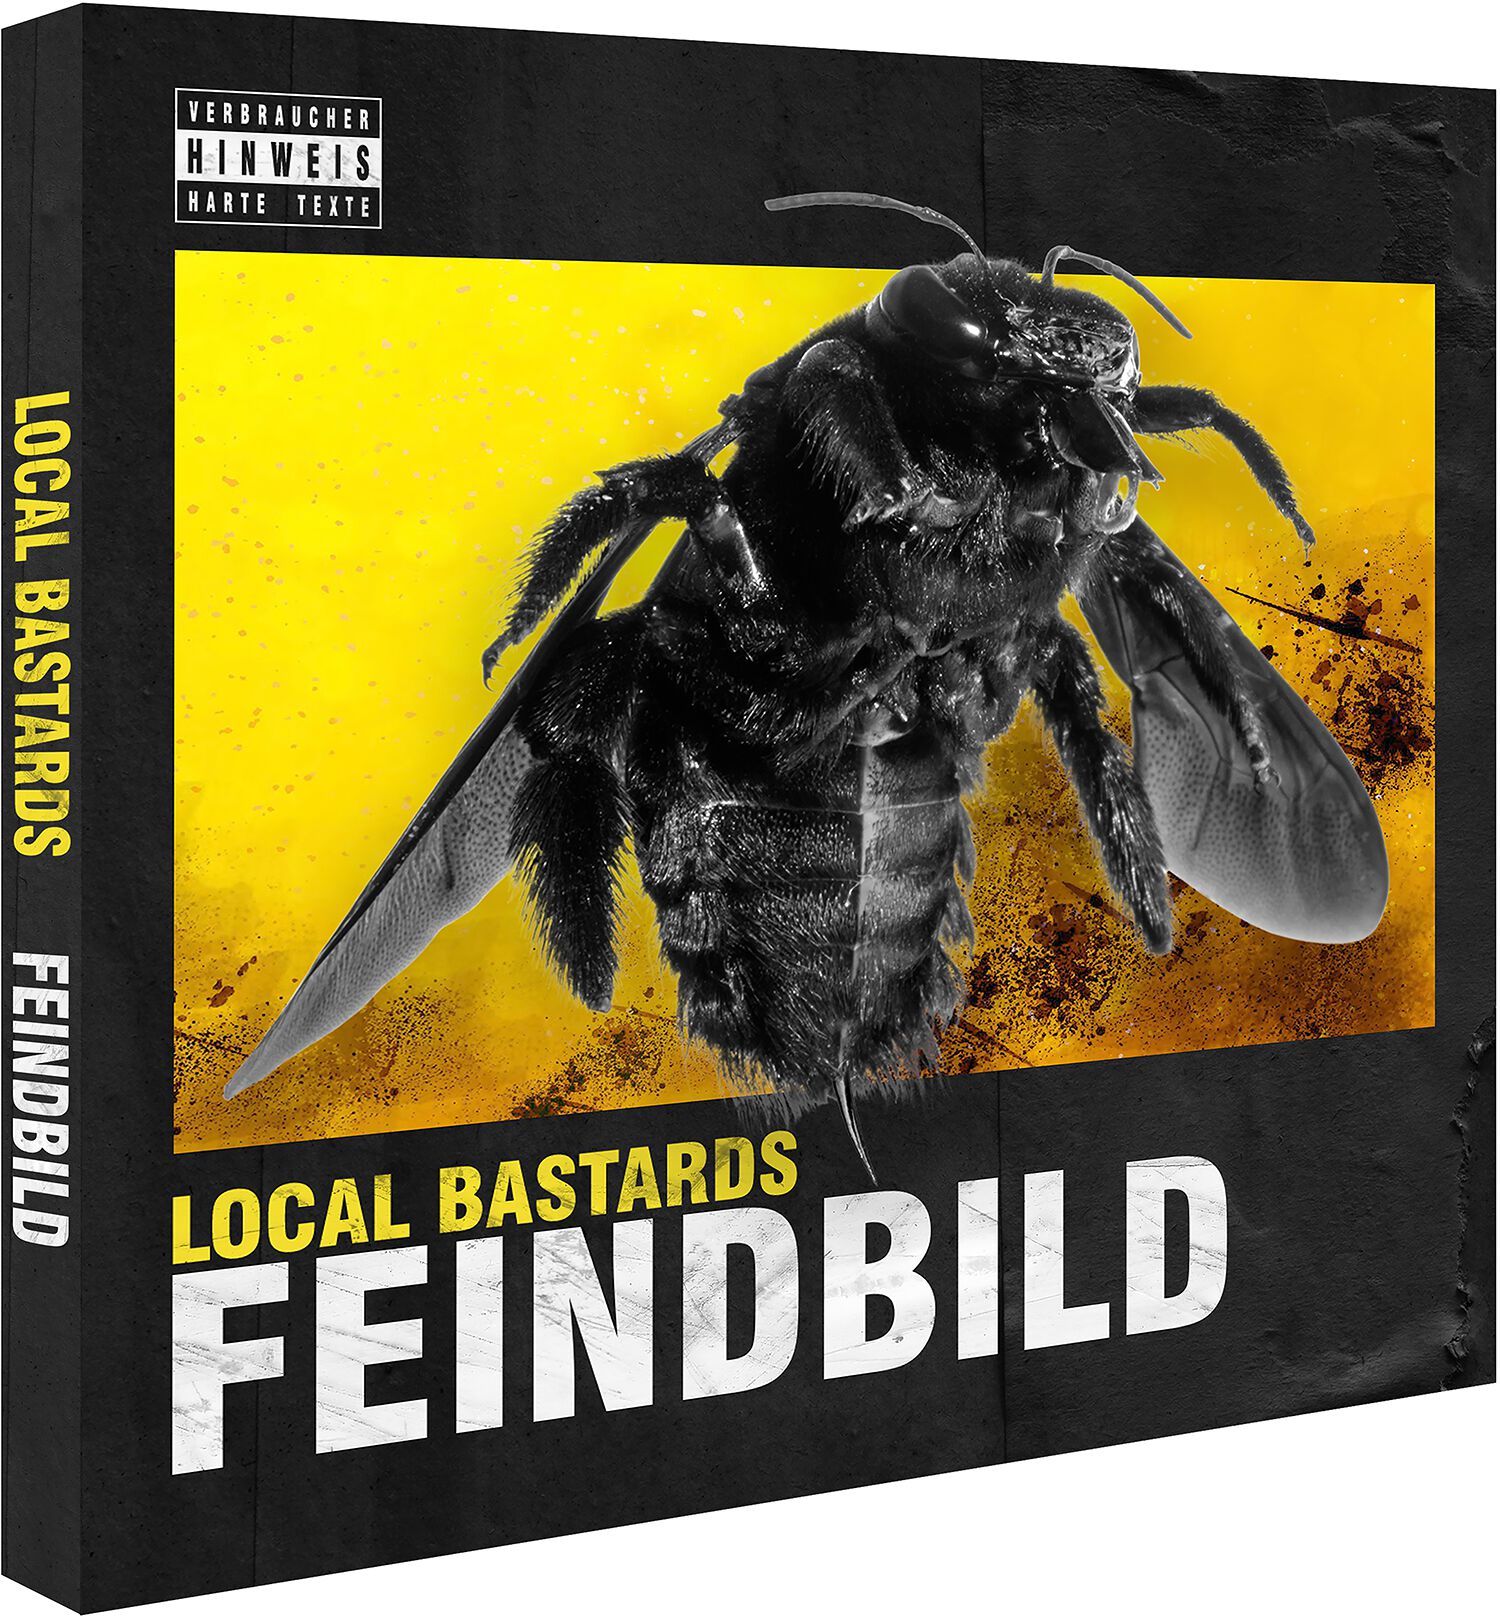 Image of Local Bastards Feindbild CD Standard